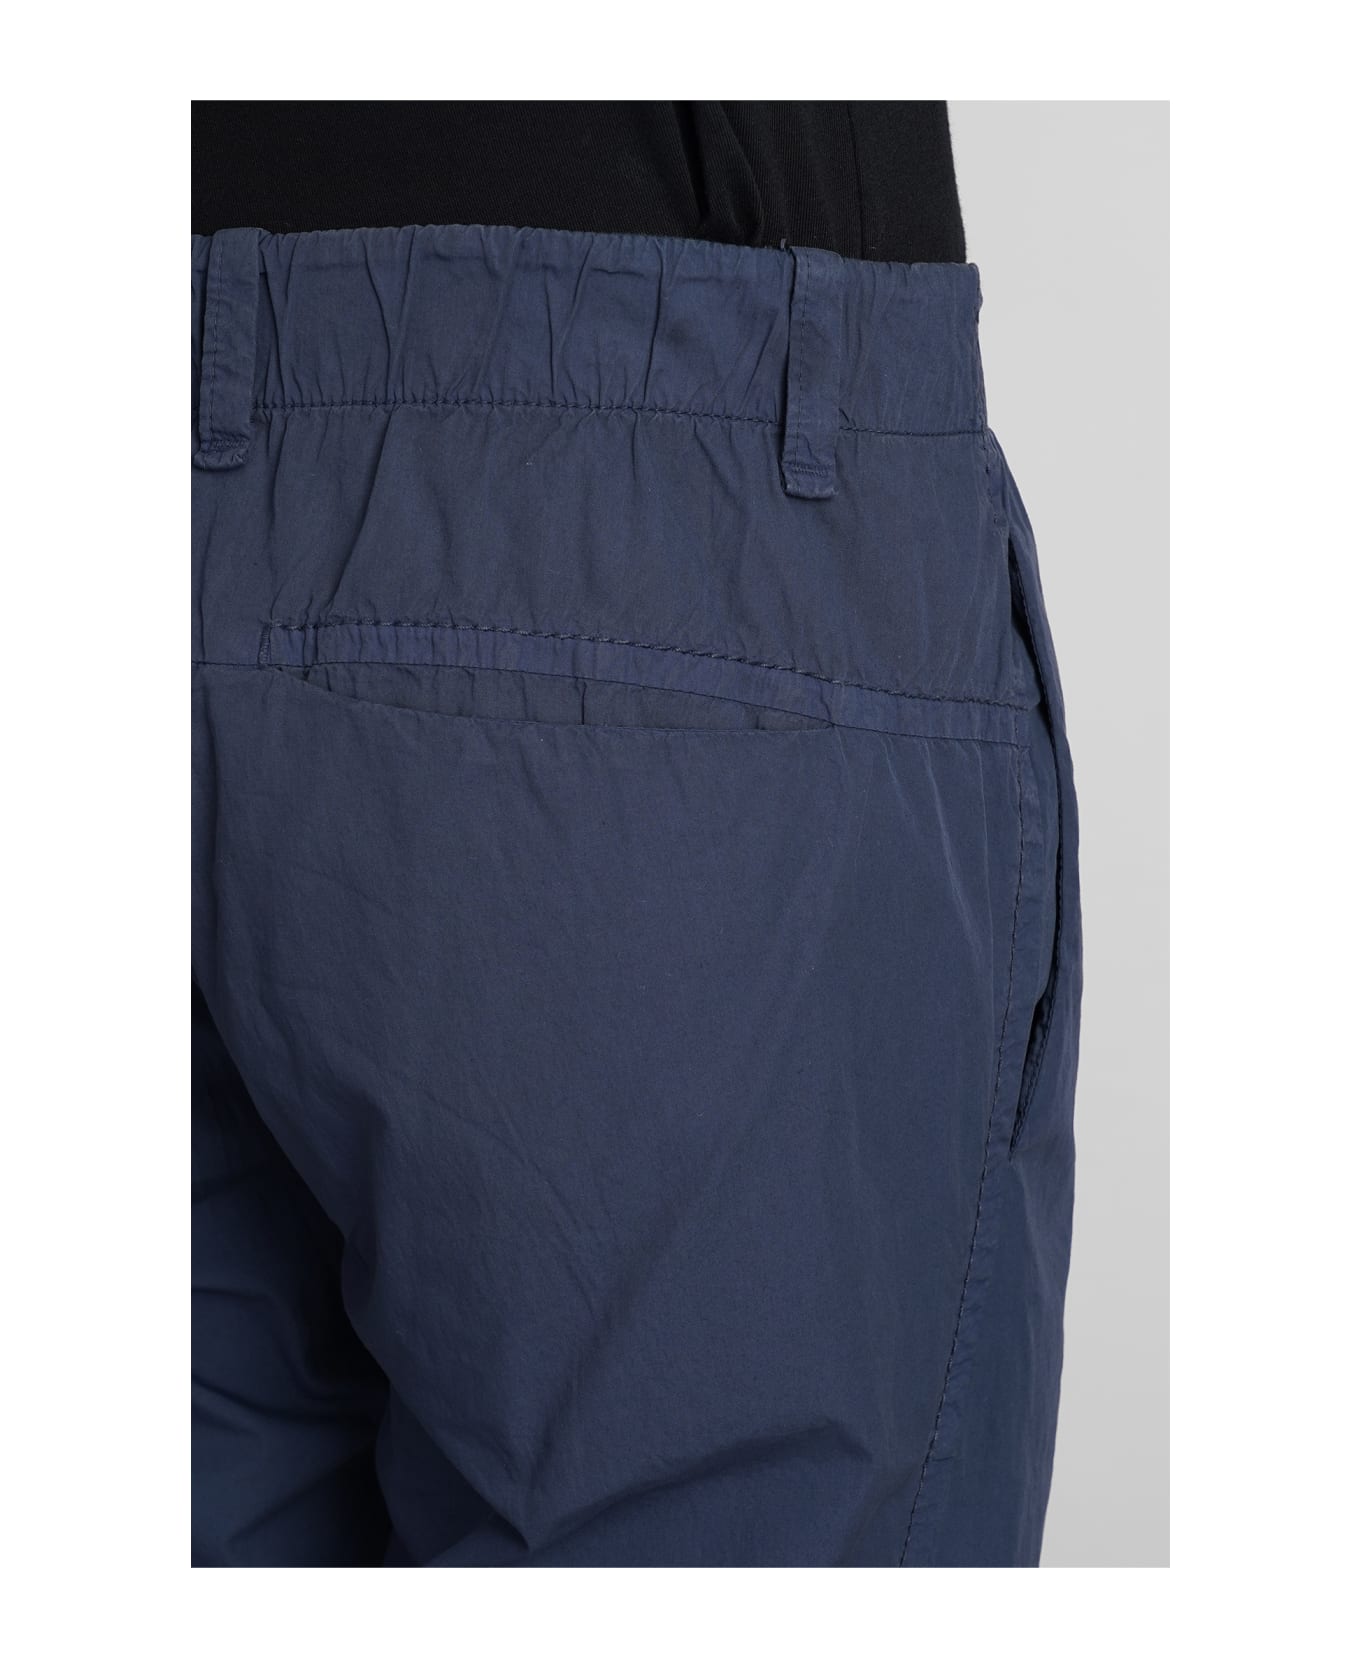 Transit Pants In Blue Cotton - blue ボトムス